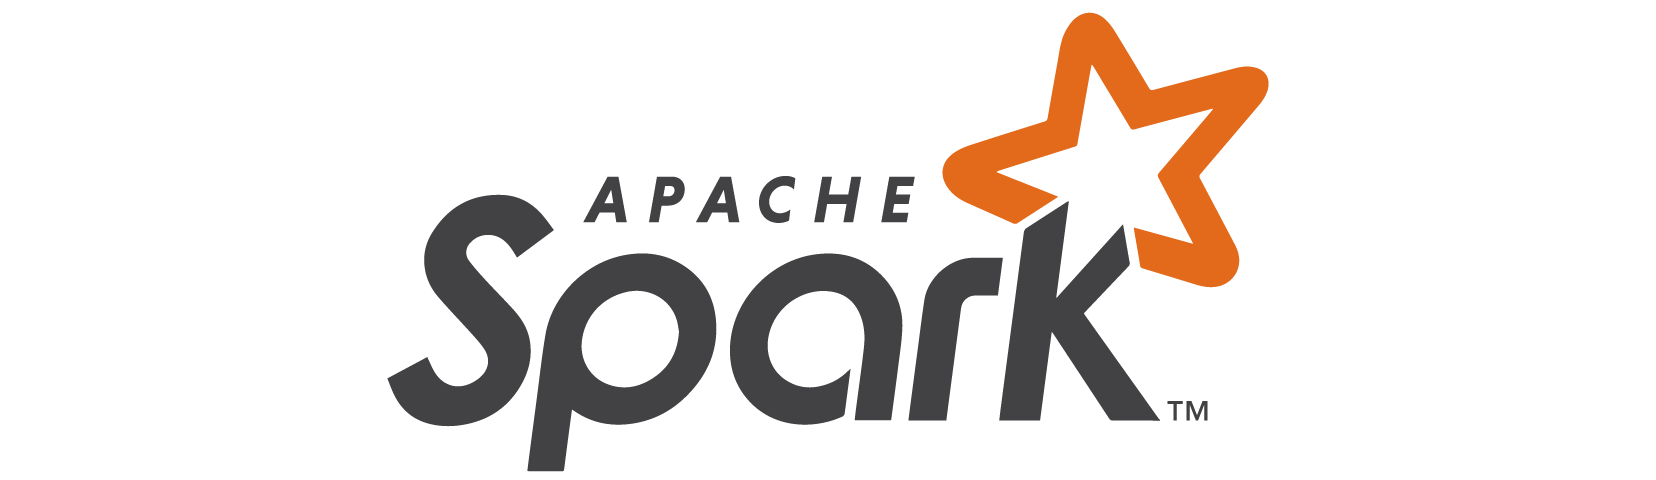 Apache Spark la gi